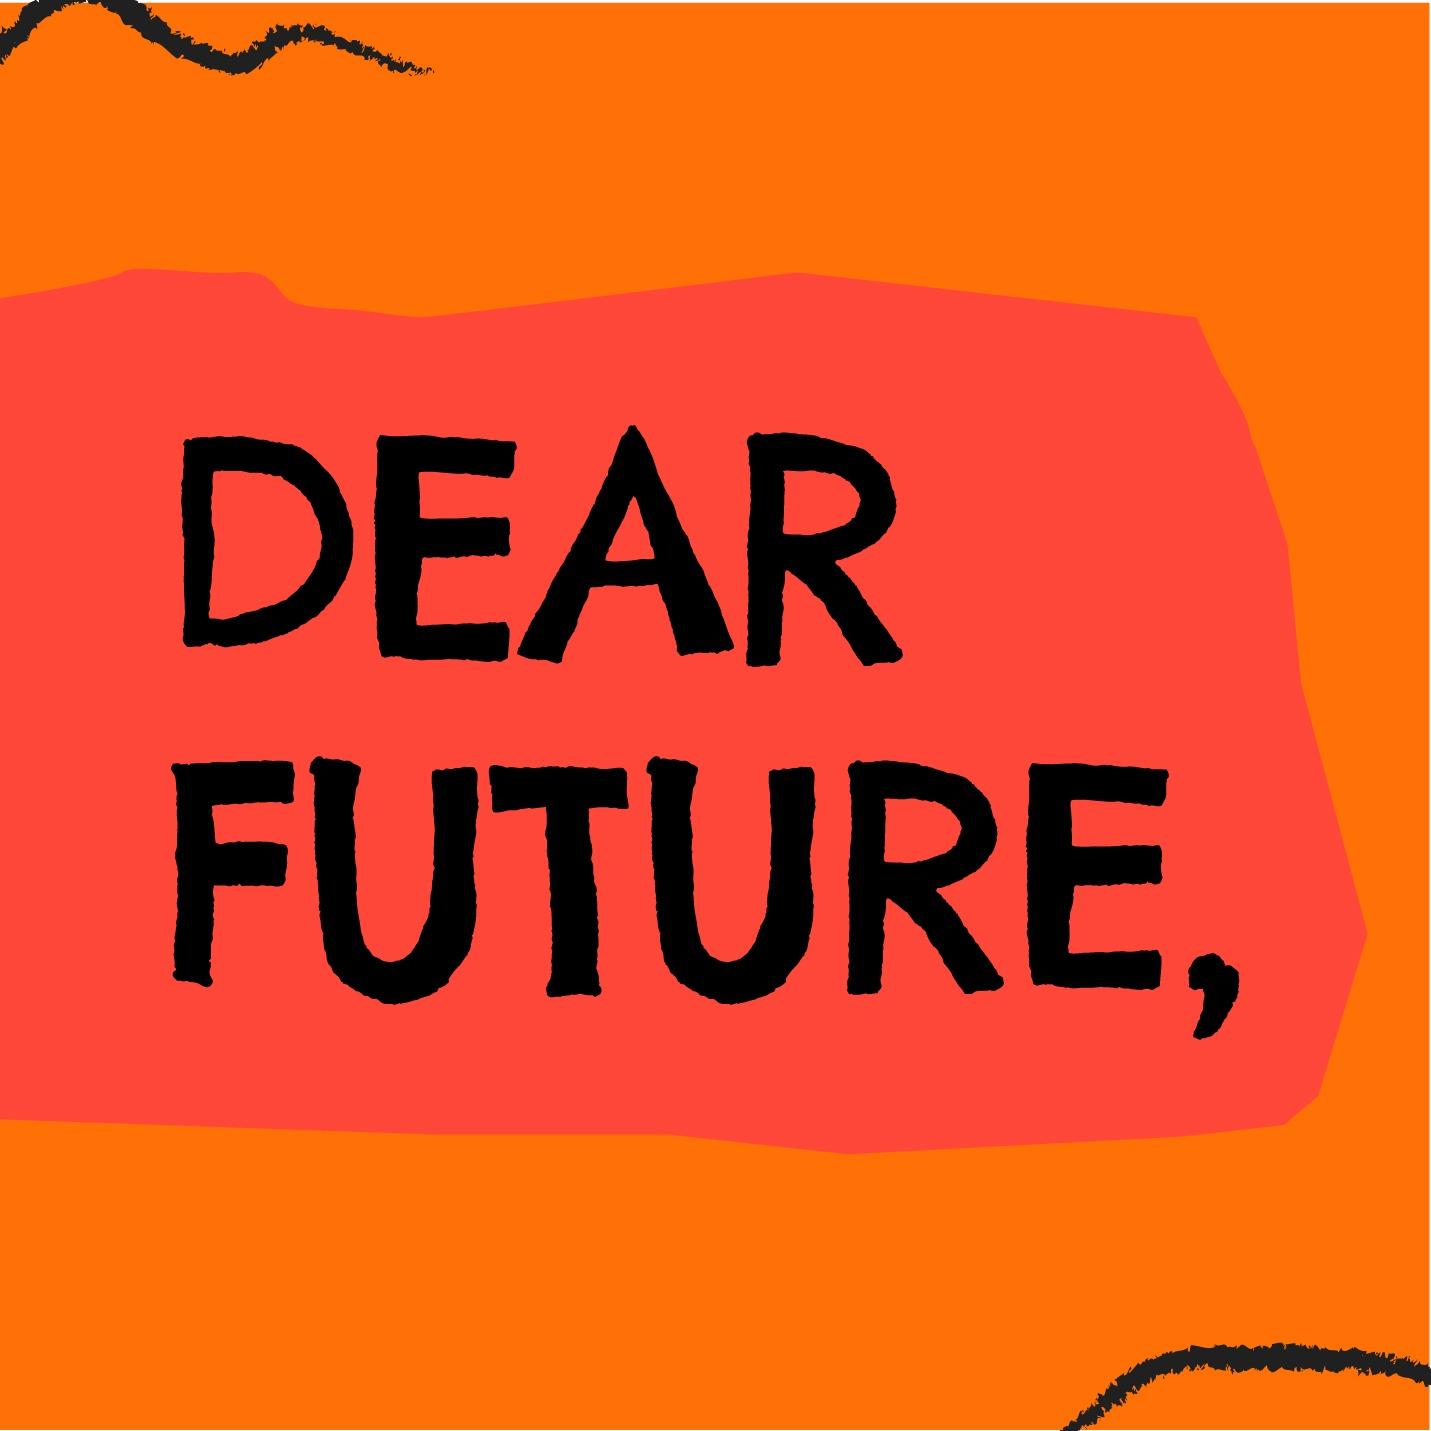 Dear Future,